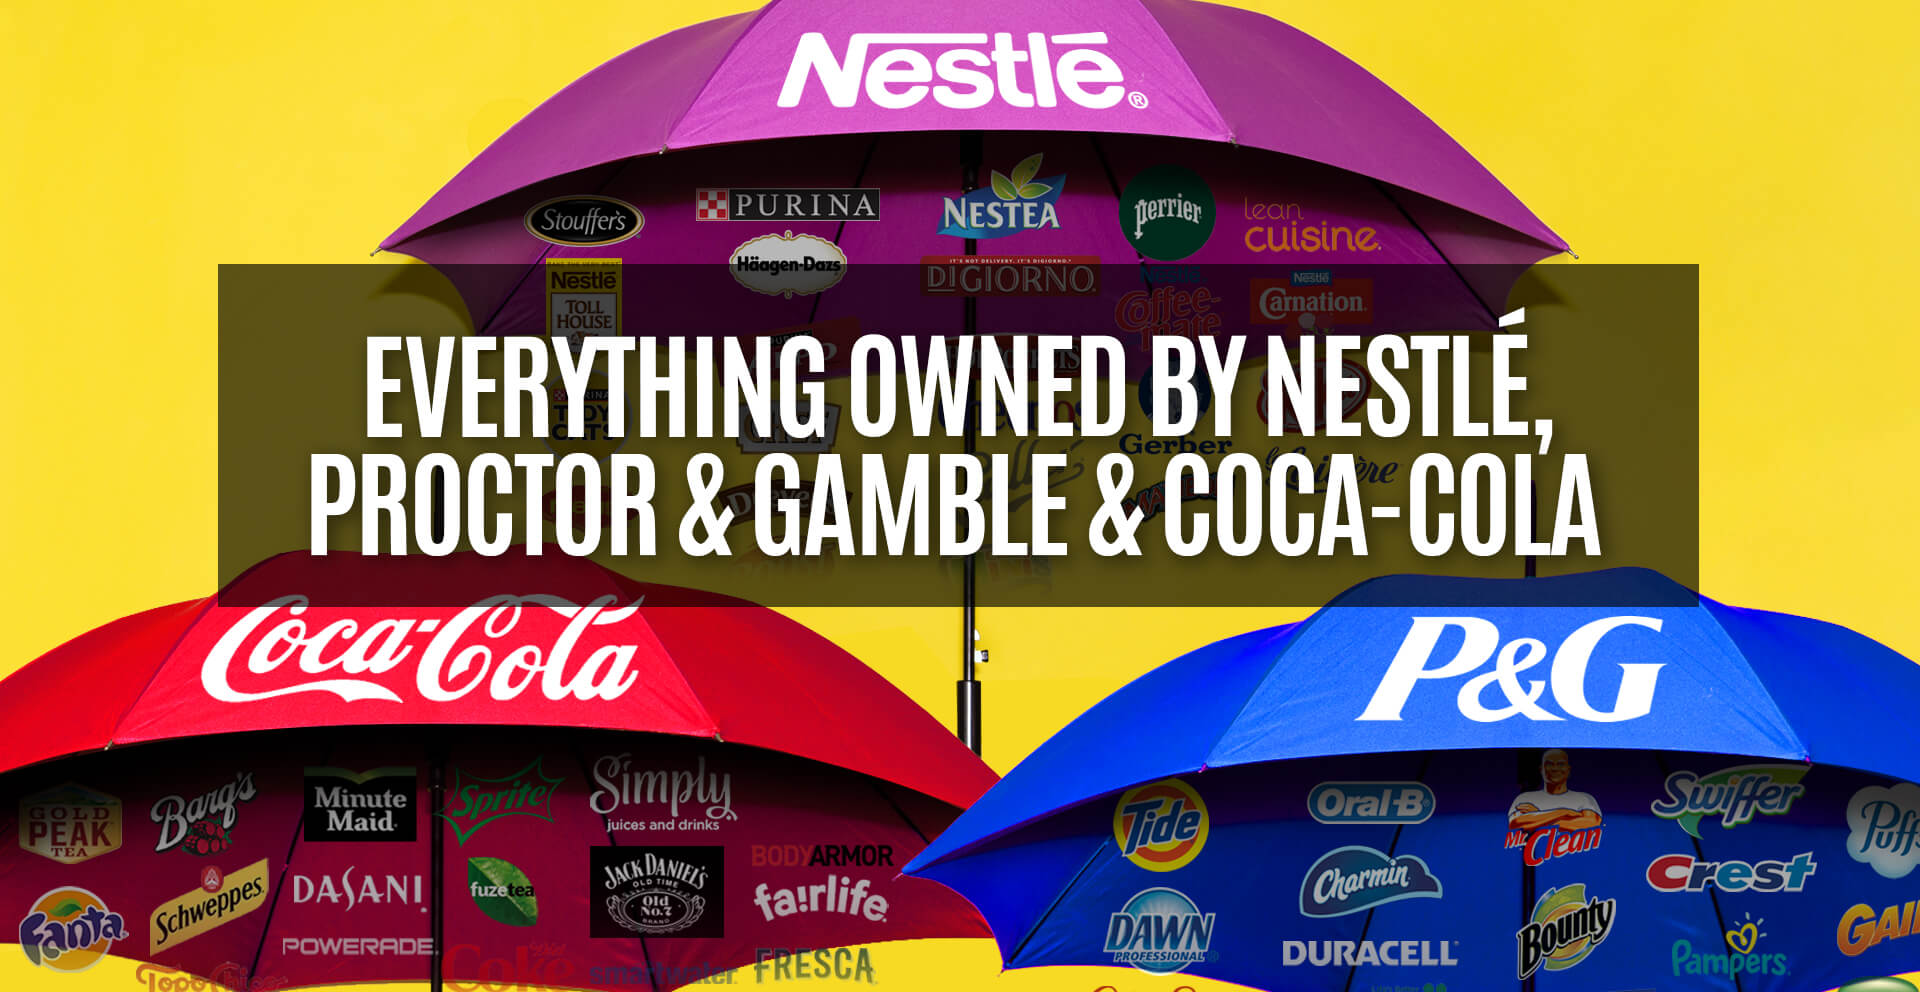 All companies under the umbrella of Nestle, Proctor & Gamble and Coca-Cola